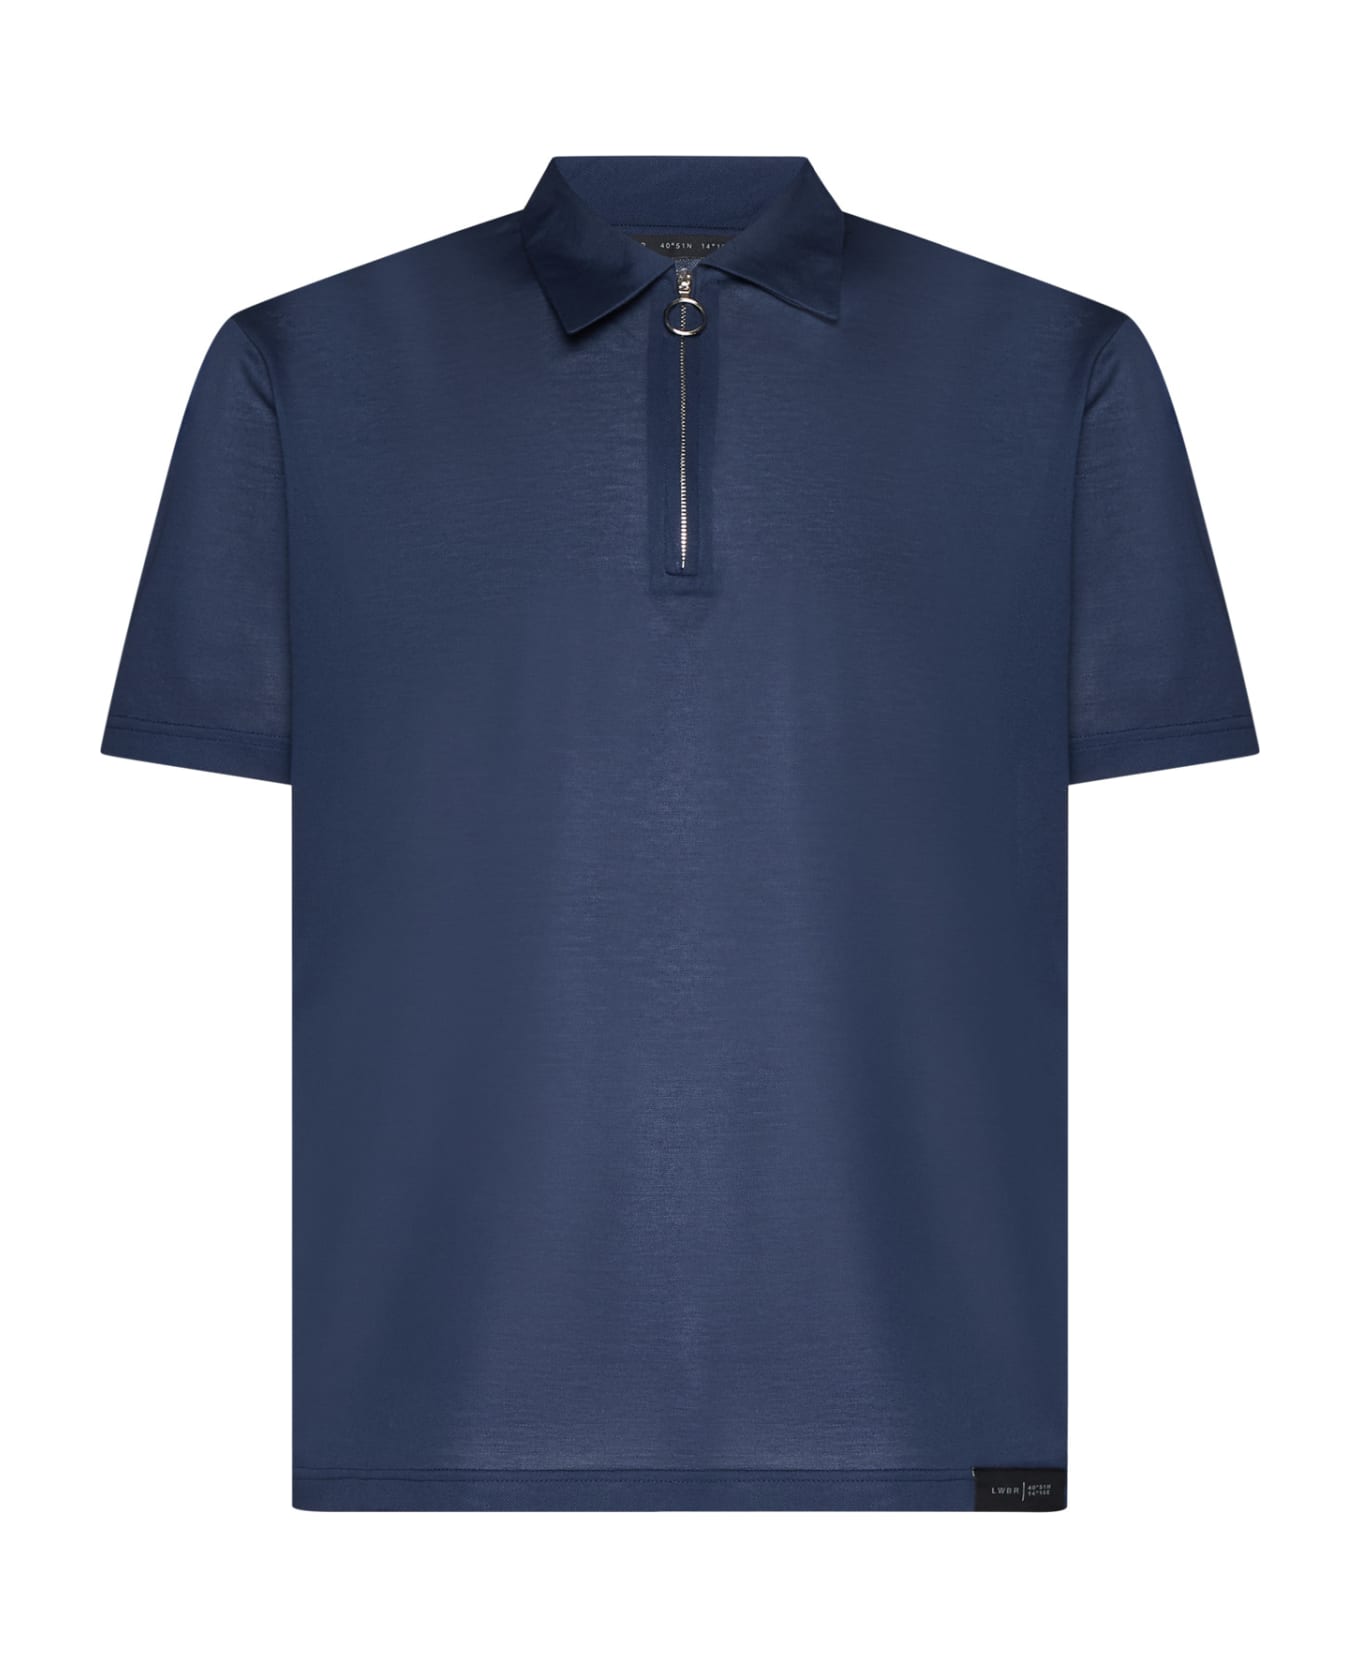 Low Brand Polo Shirt - Blue